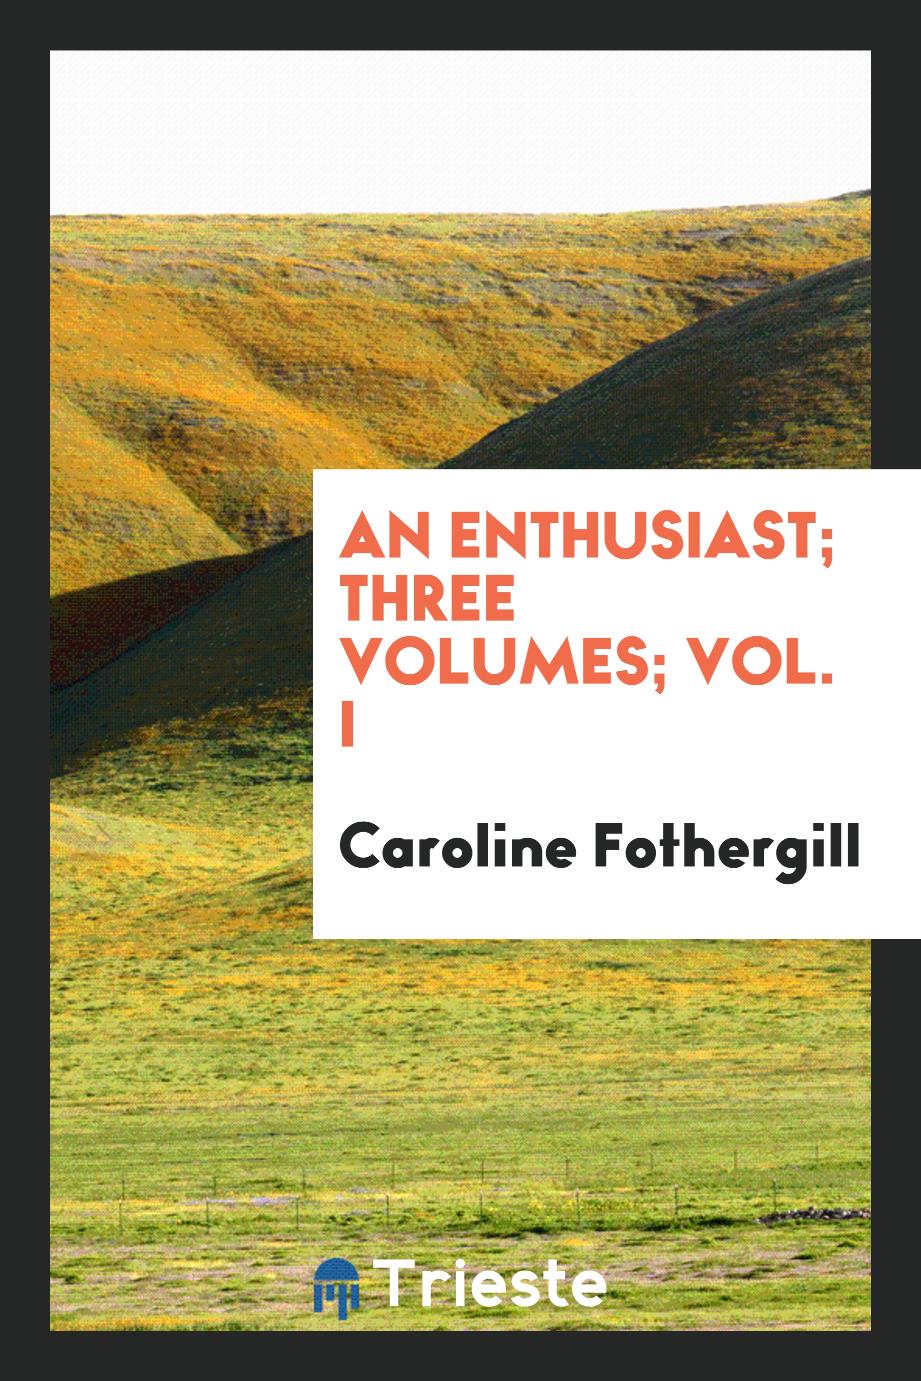 An enthusiast; Three volumes; Vol. I